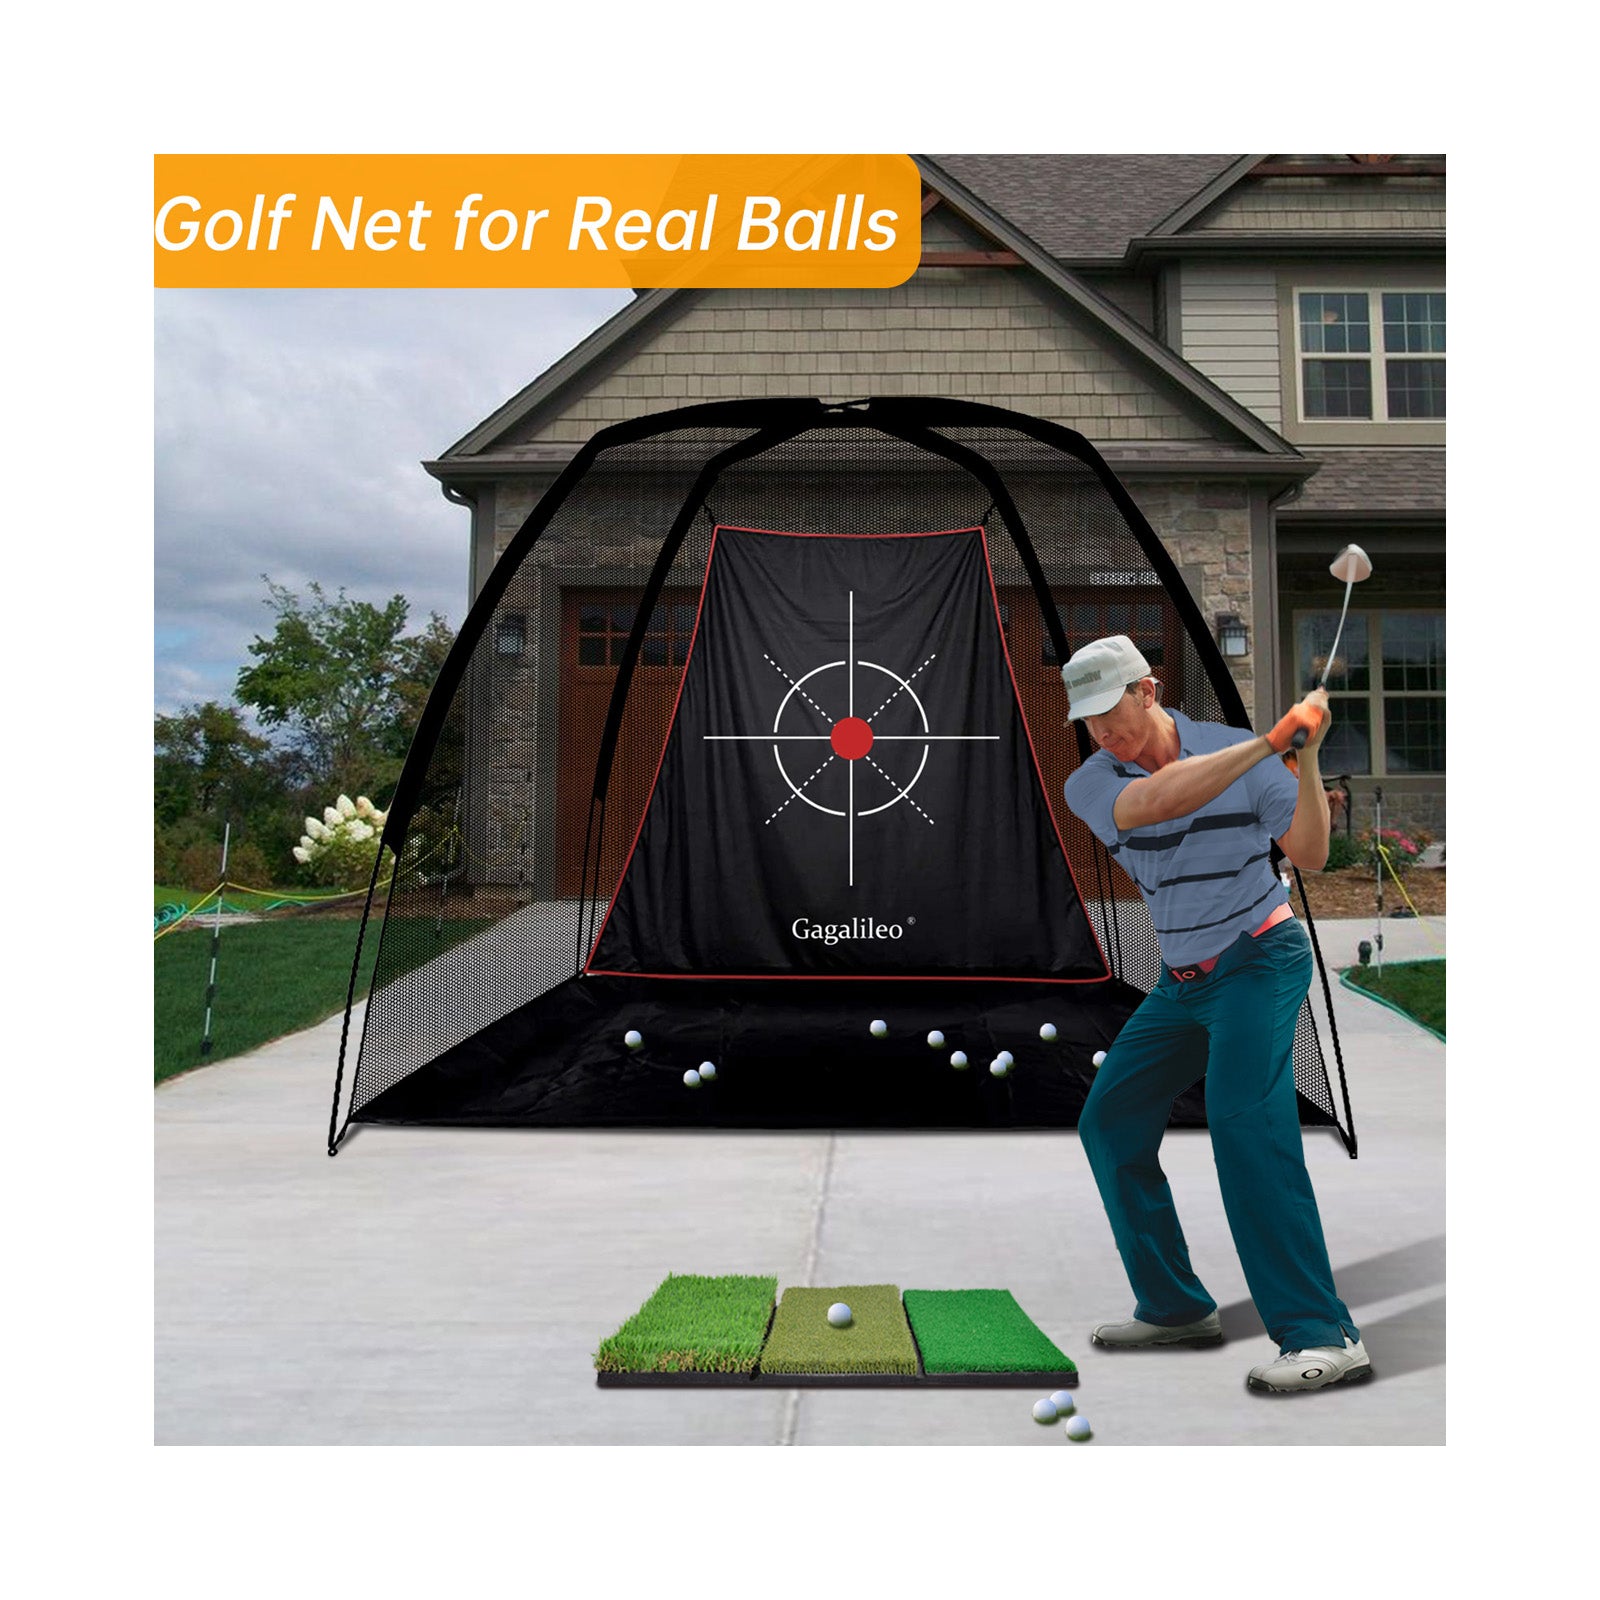 Red de golf Red de golf práctica red de golf parapatio trasero Redes de golf para uso en interiores | 8' X 6' X 5' | Objetivo professional | deportiert Galilei